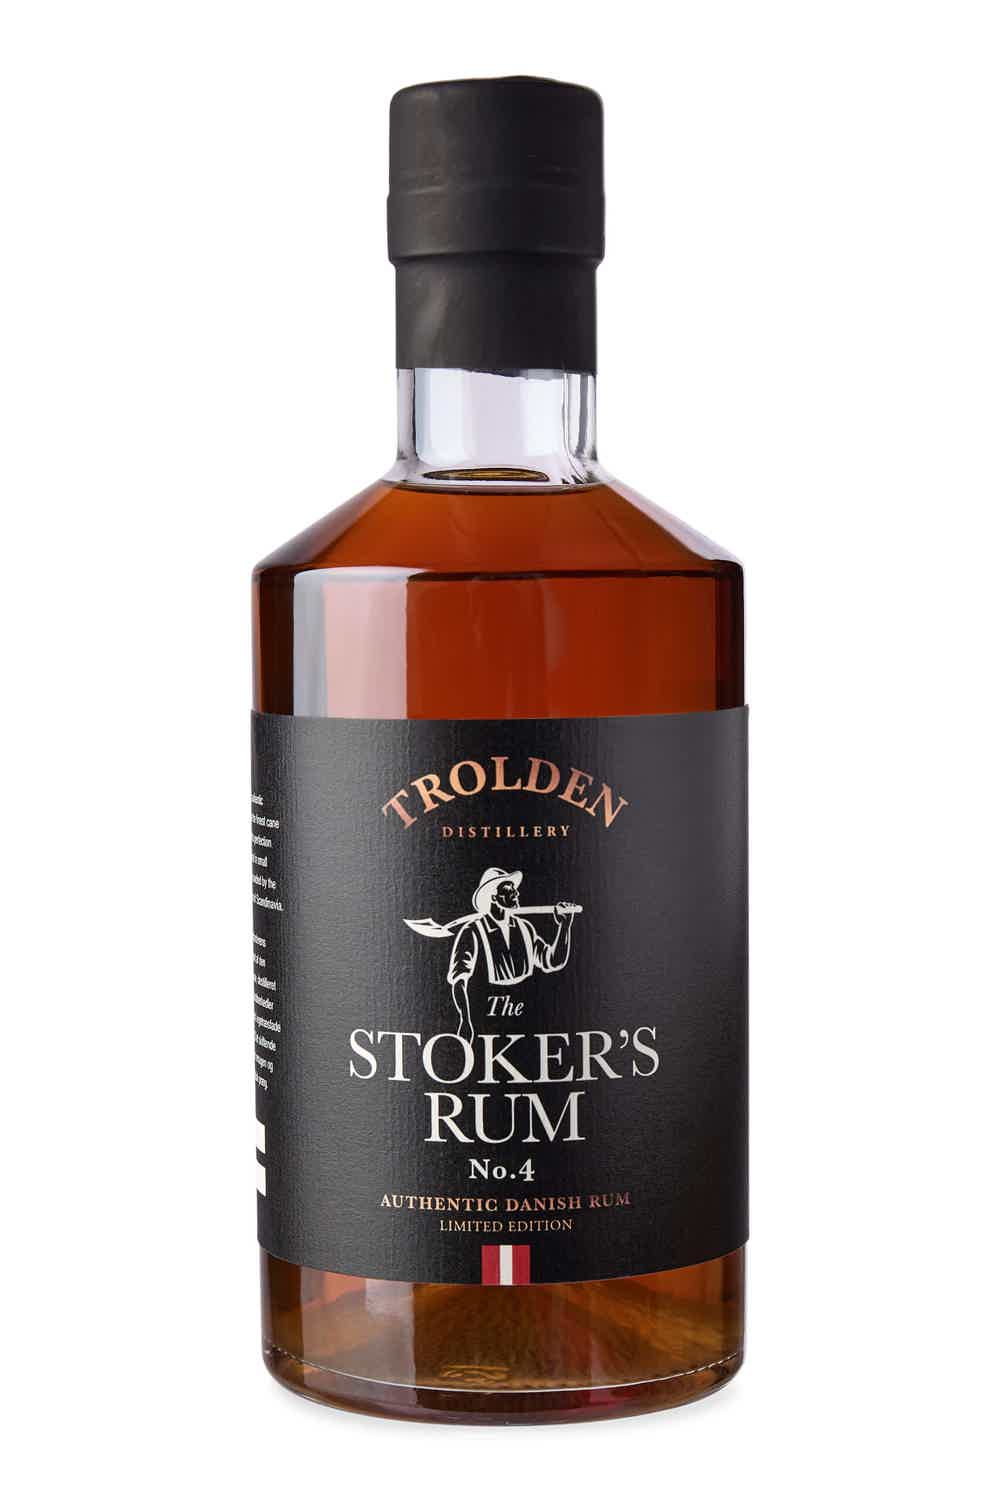 The Stoker's Rum No. 4